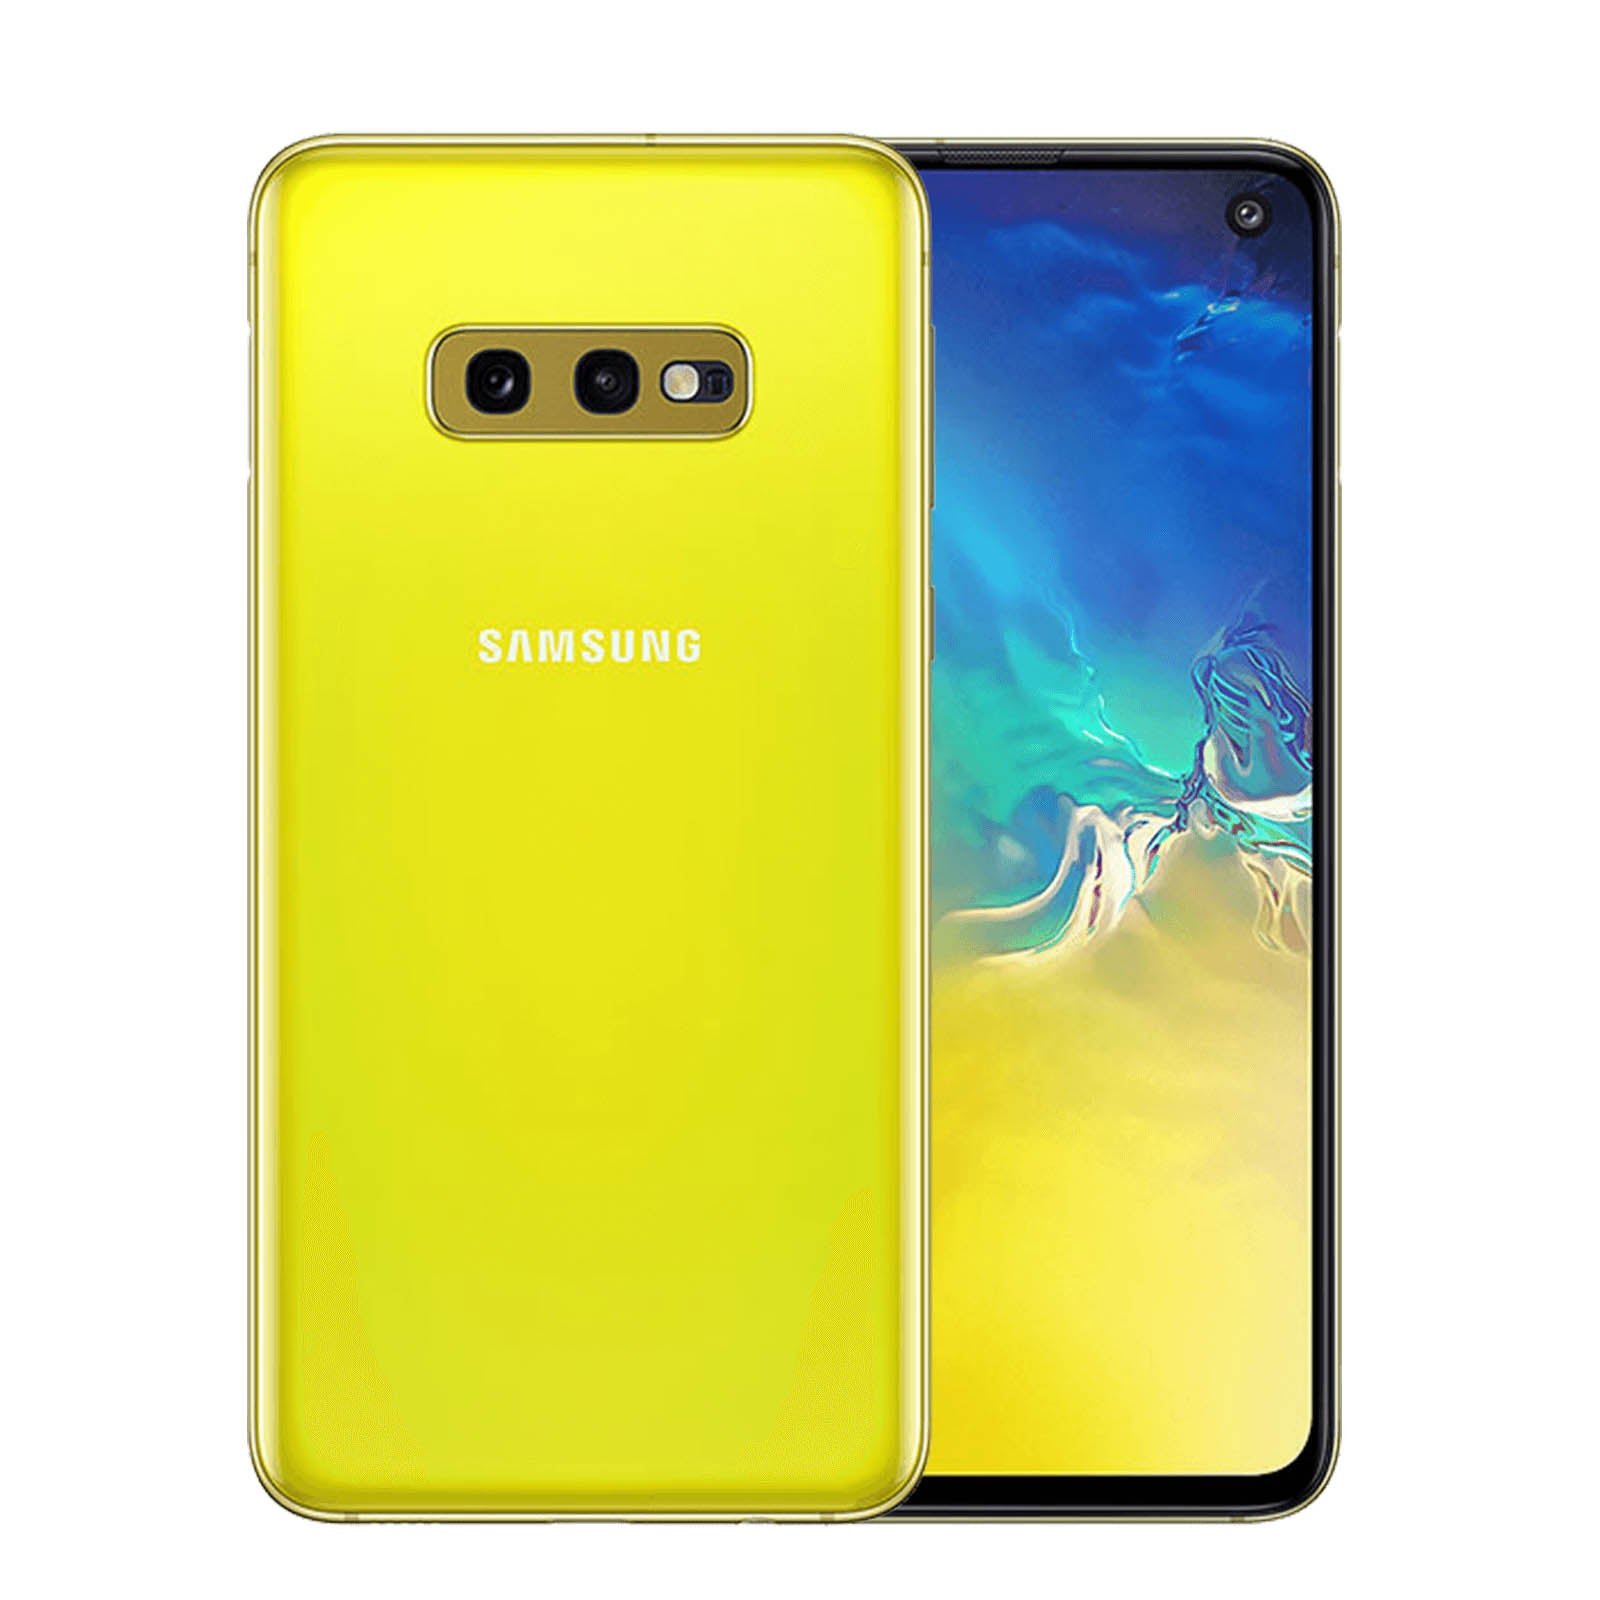 Samsung Galaxy S10E 128GB Yellow Very good - Unlocked